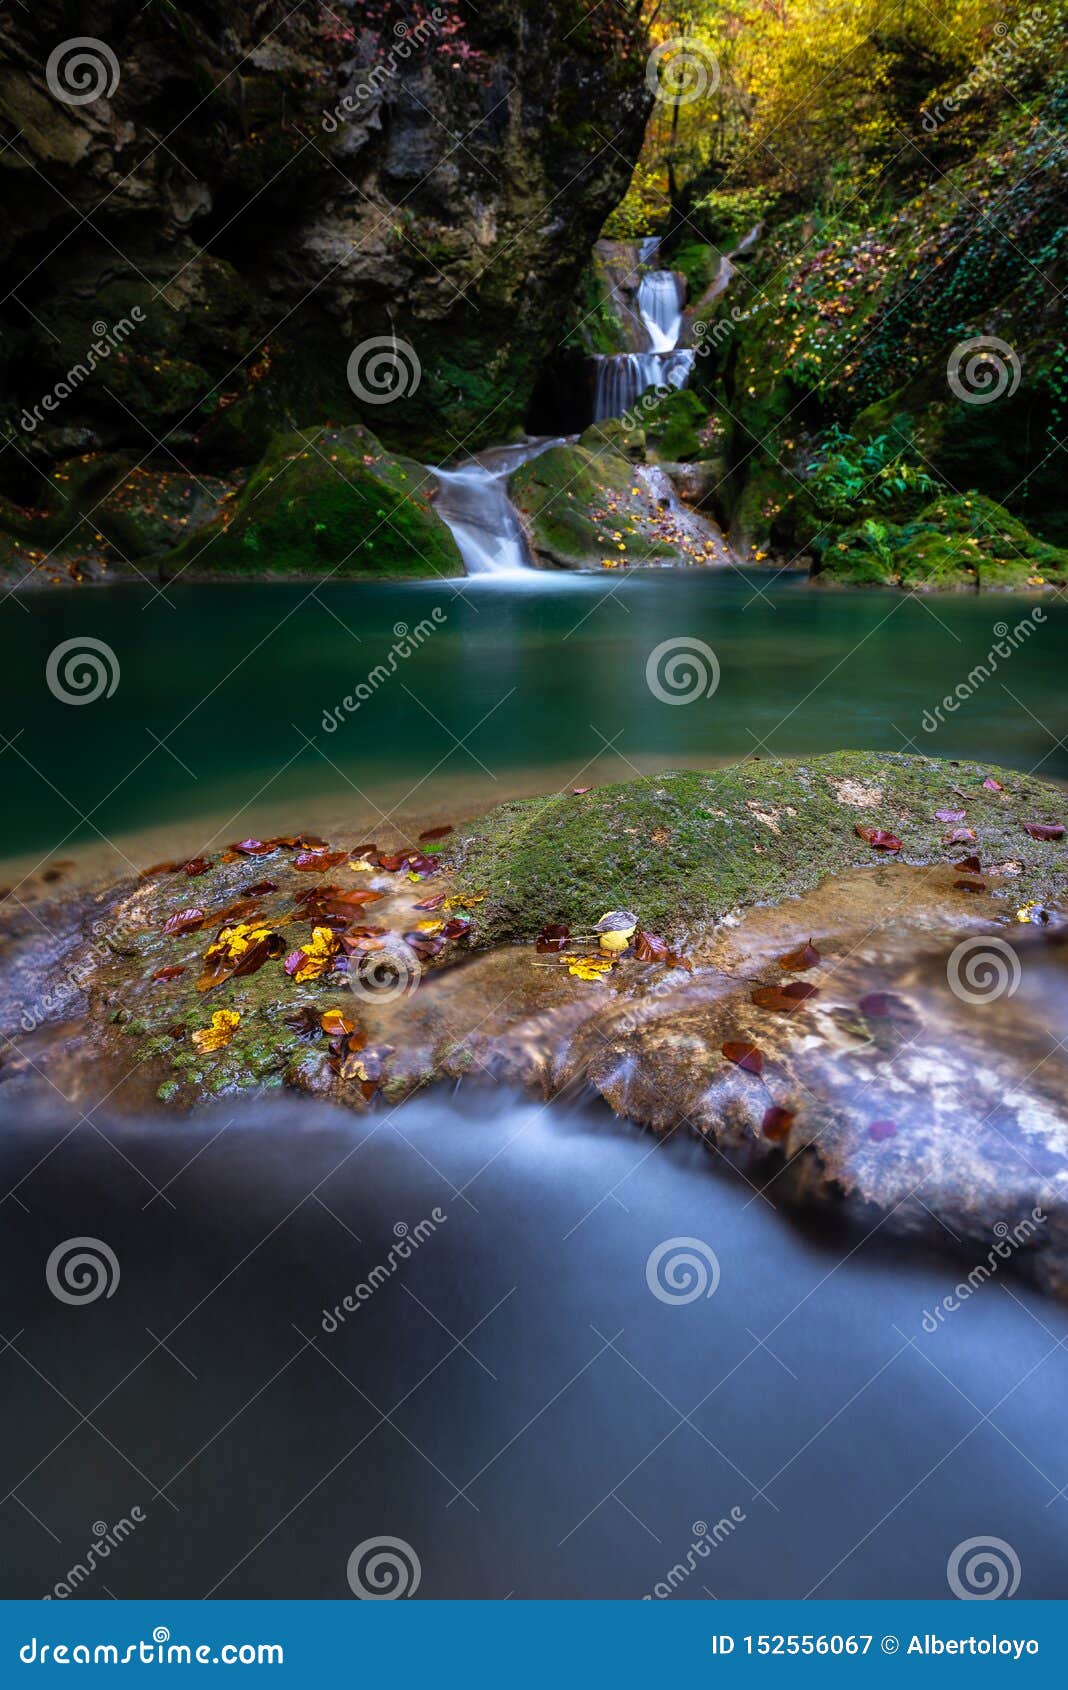 source of urederra river in urbasa mountain range, navarre, spain